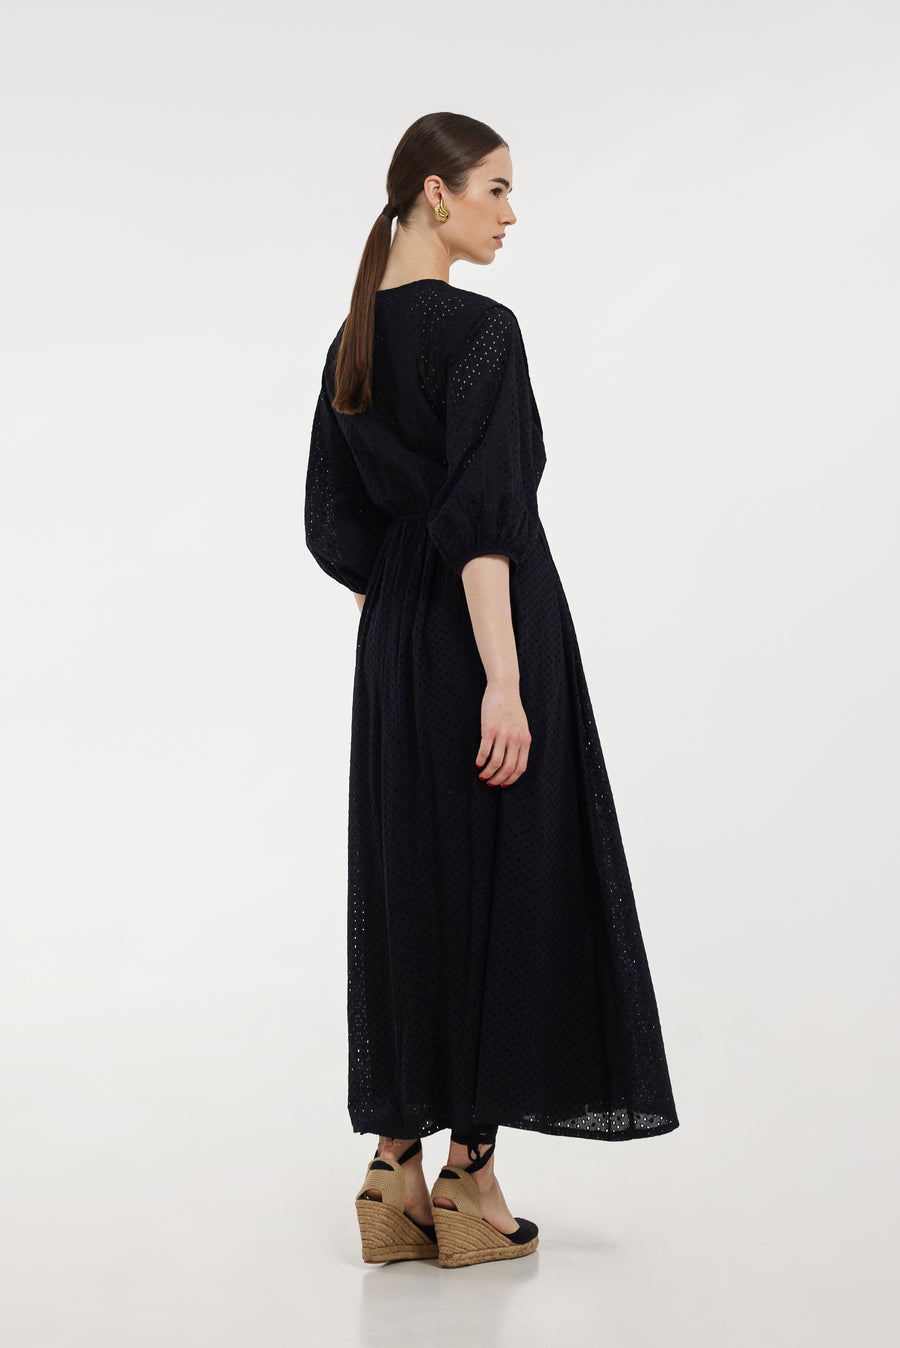 Lorenne Dress (Black lace)